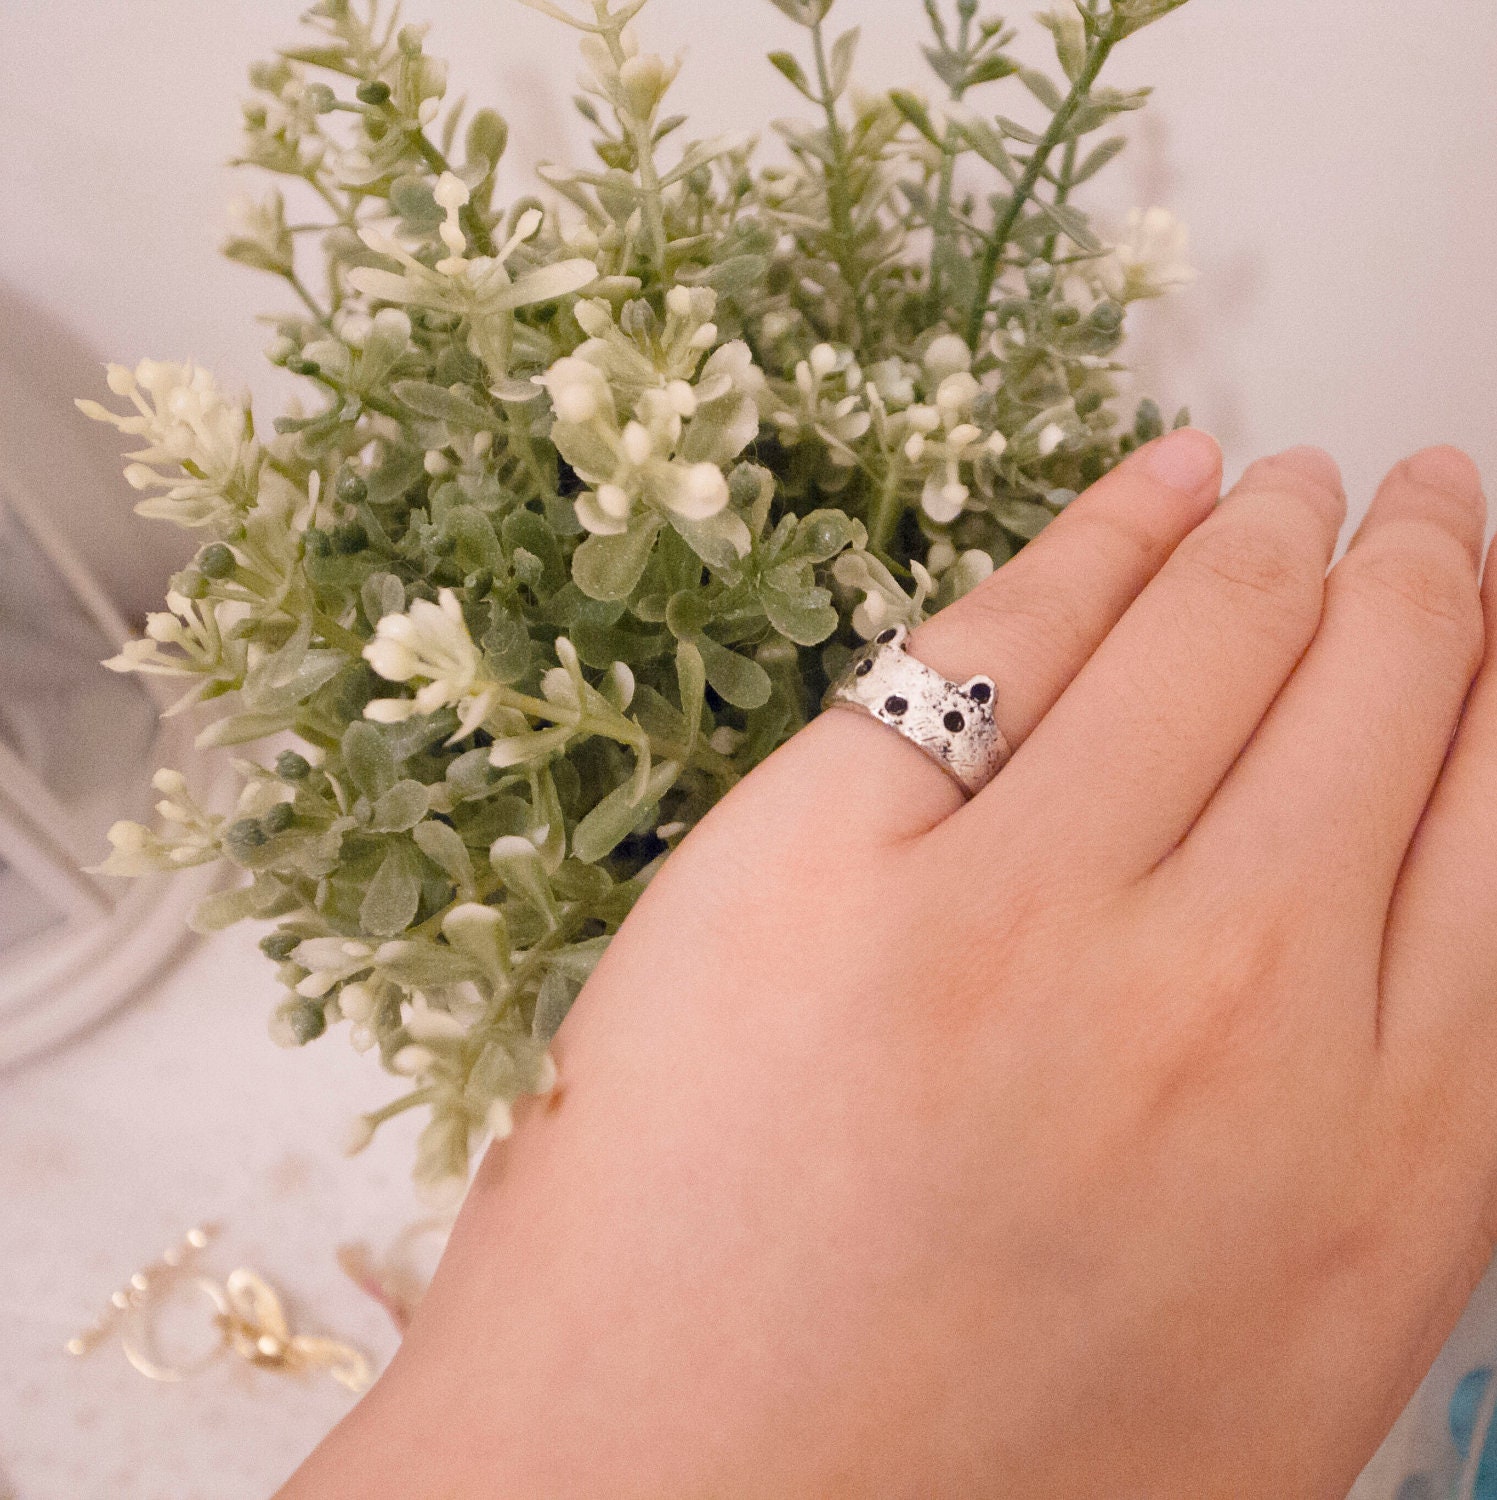 Bear Face Ring, Cat Face Ring, Adjustable Ring, small finger, forefinger, first finger, bronze color, silver color